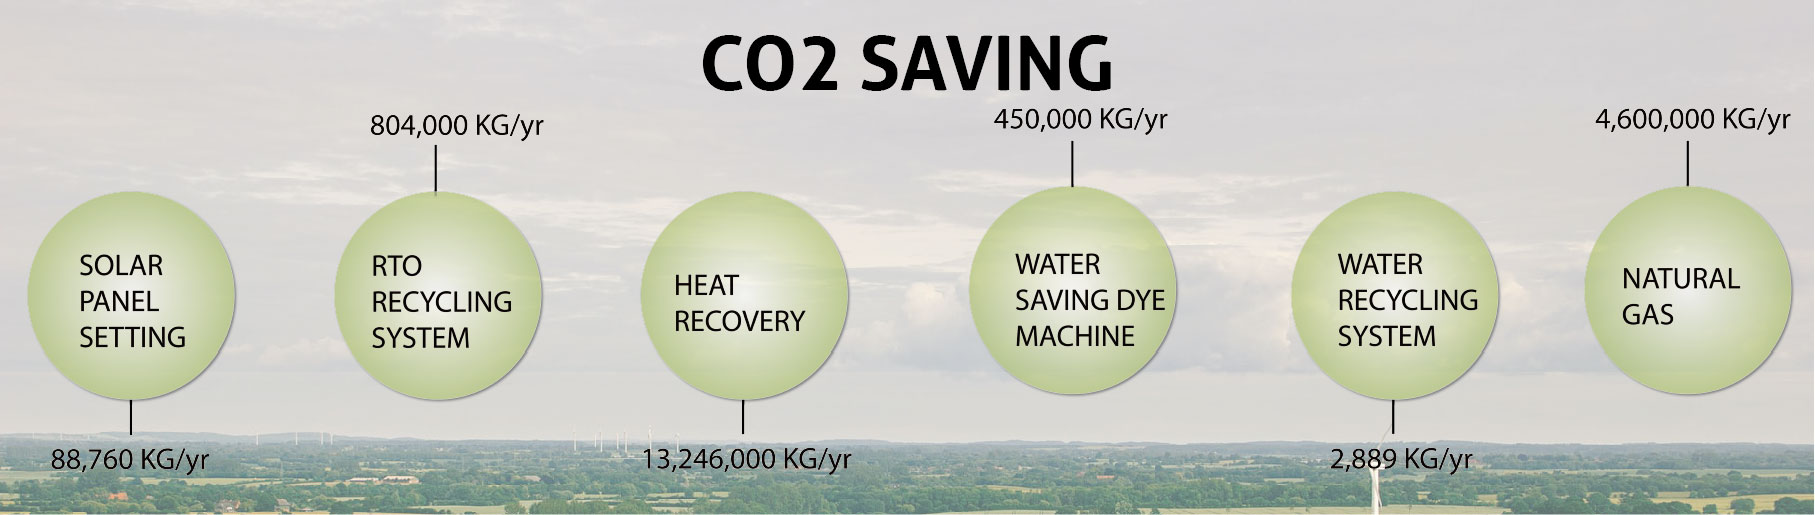 sustainability action, reduce energy consumption, reduce Co2 emissions